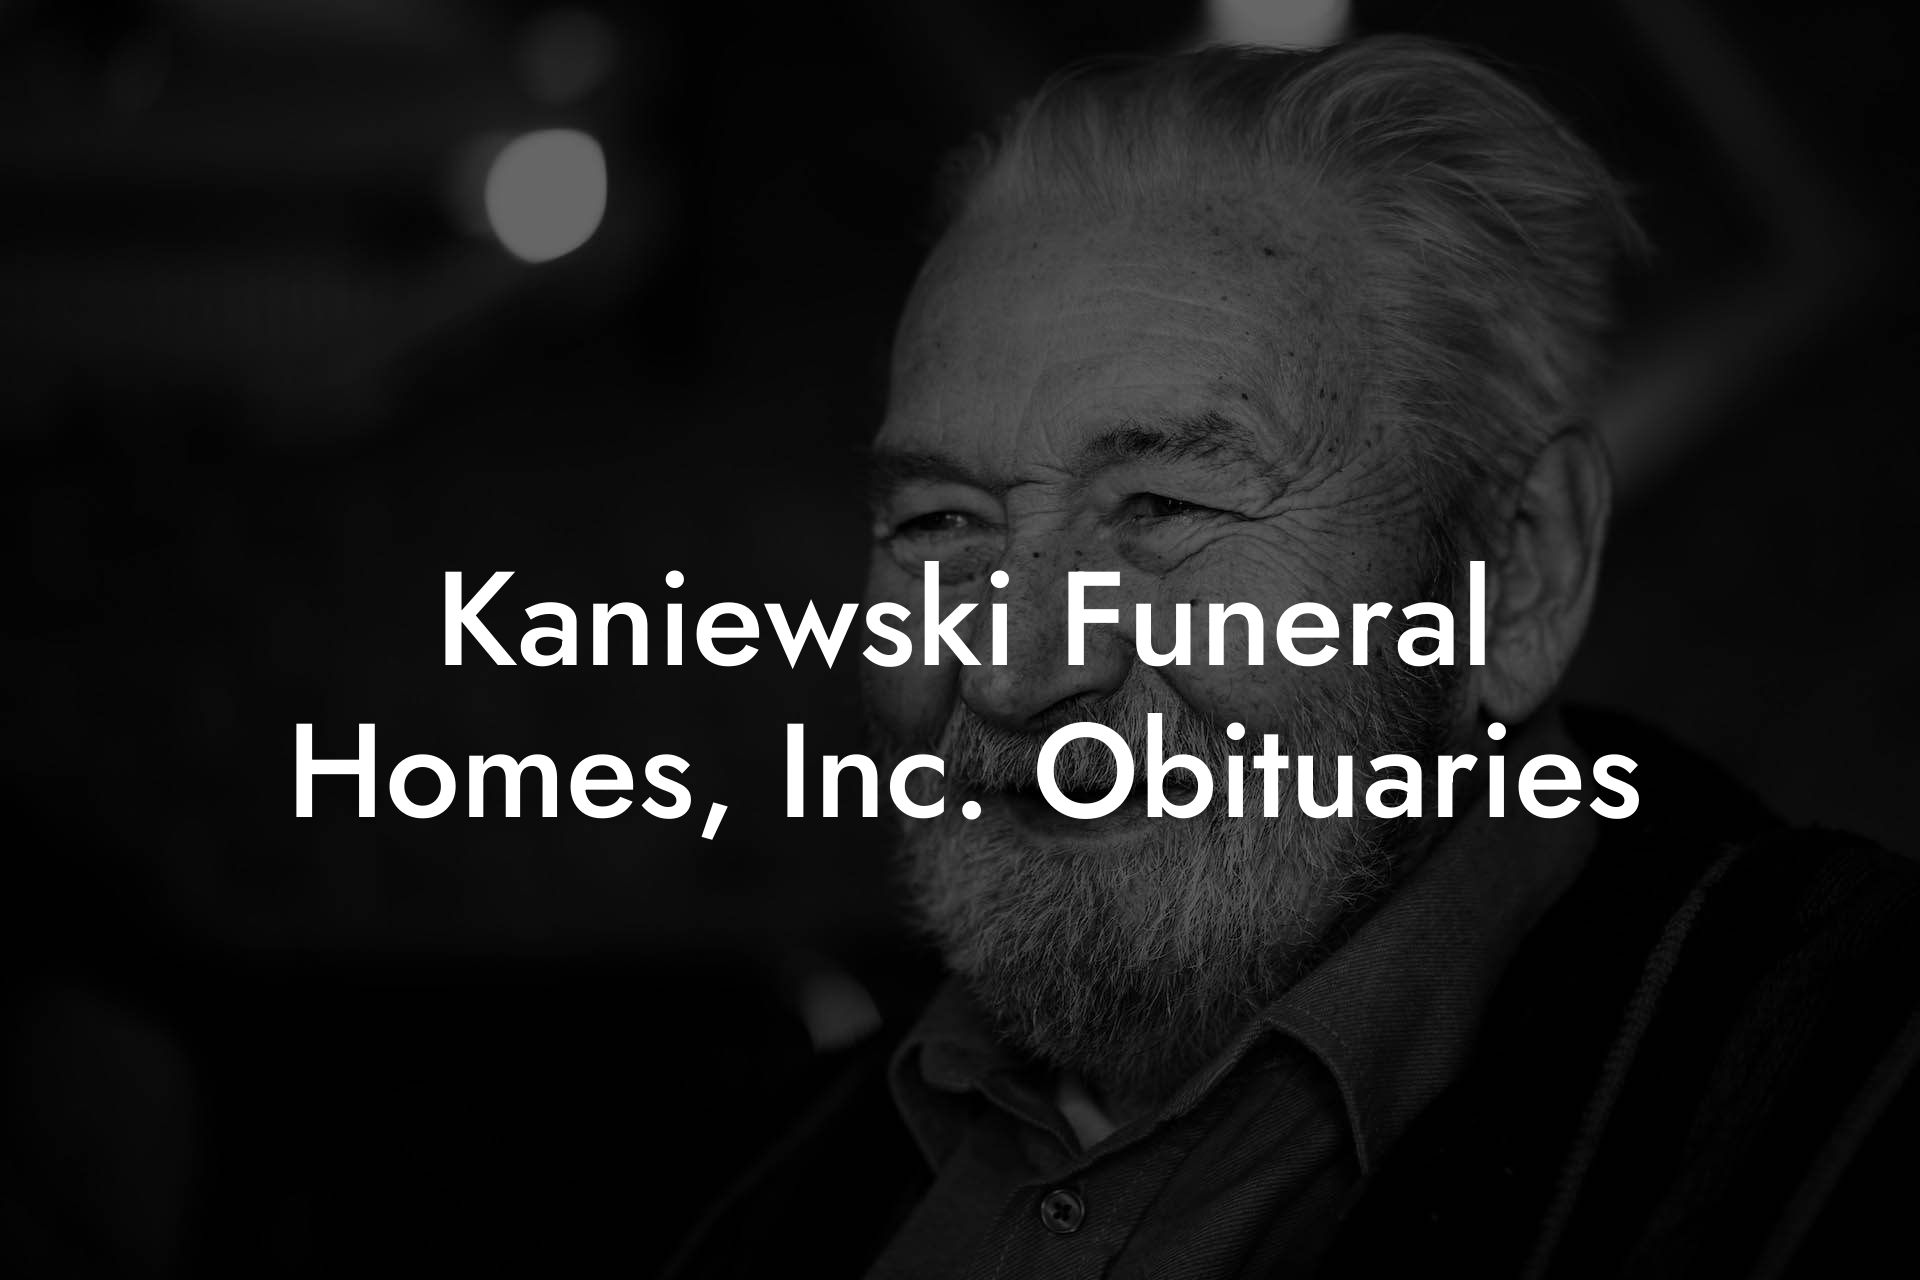 Kaniewski Funeral Homes, Inc. Obituaries